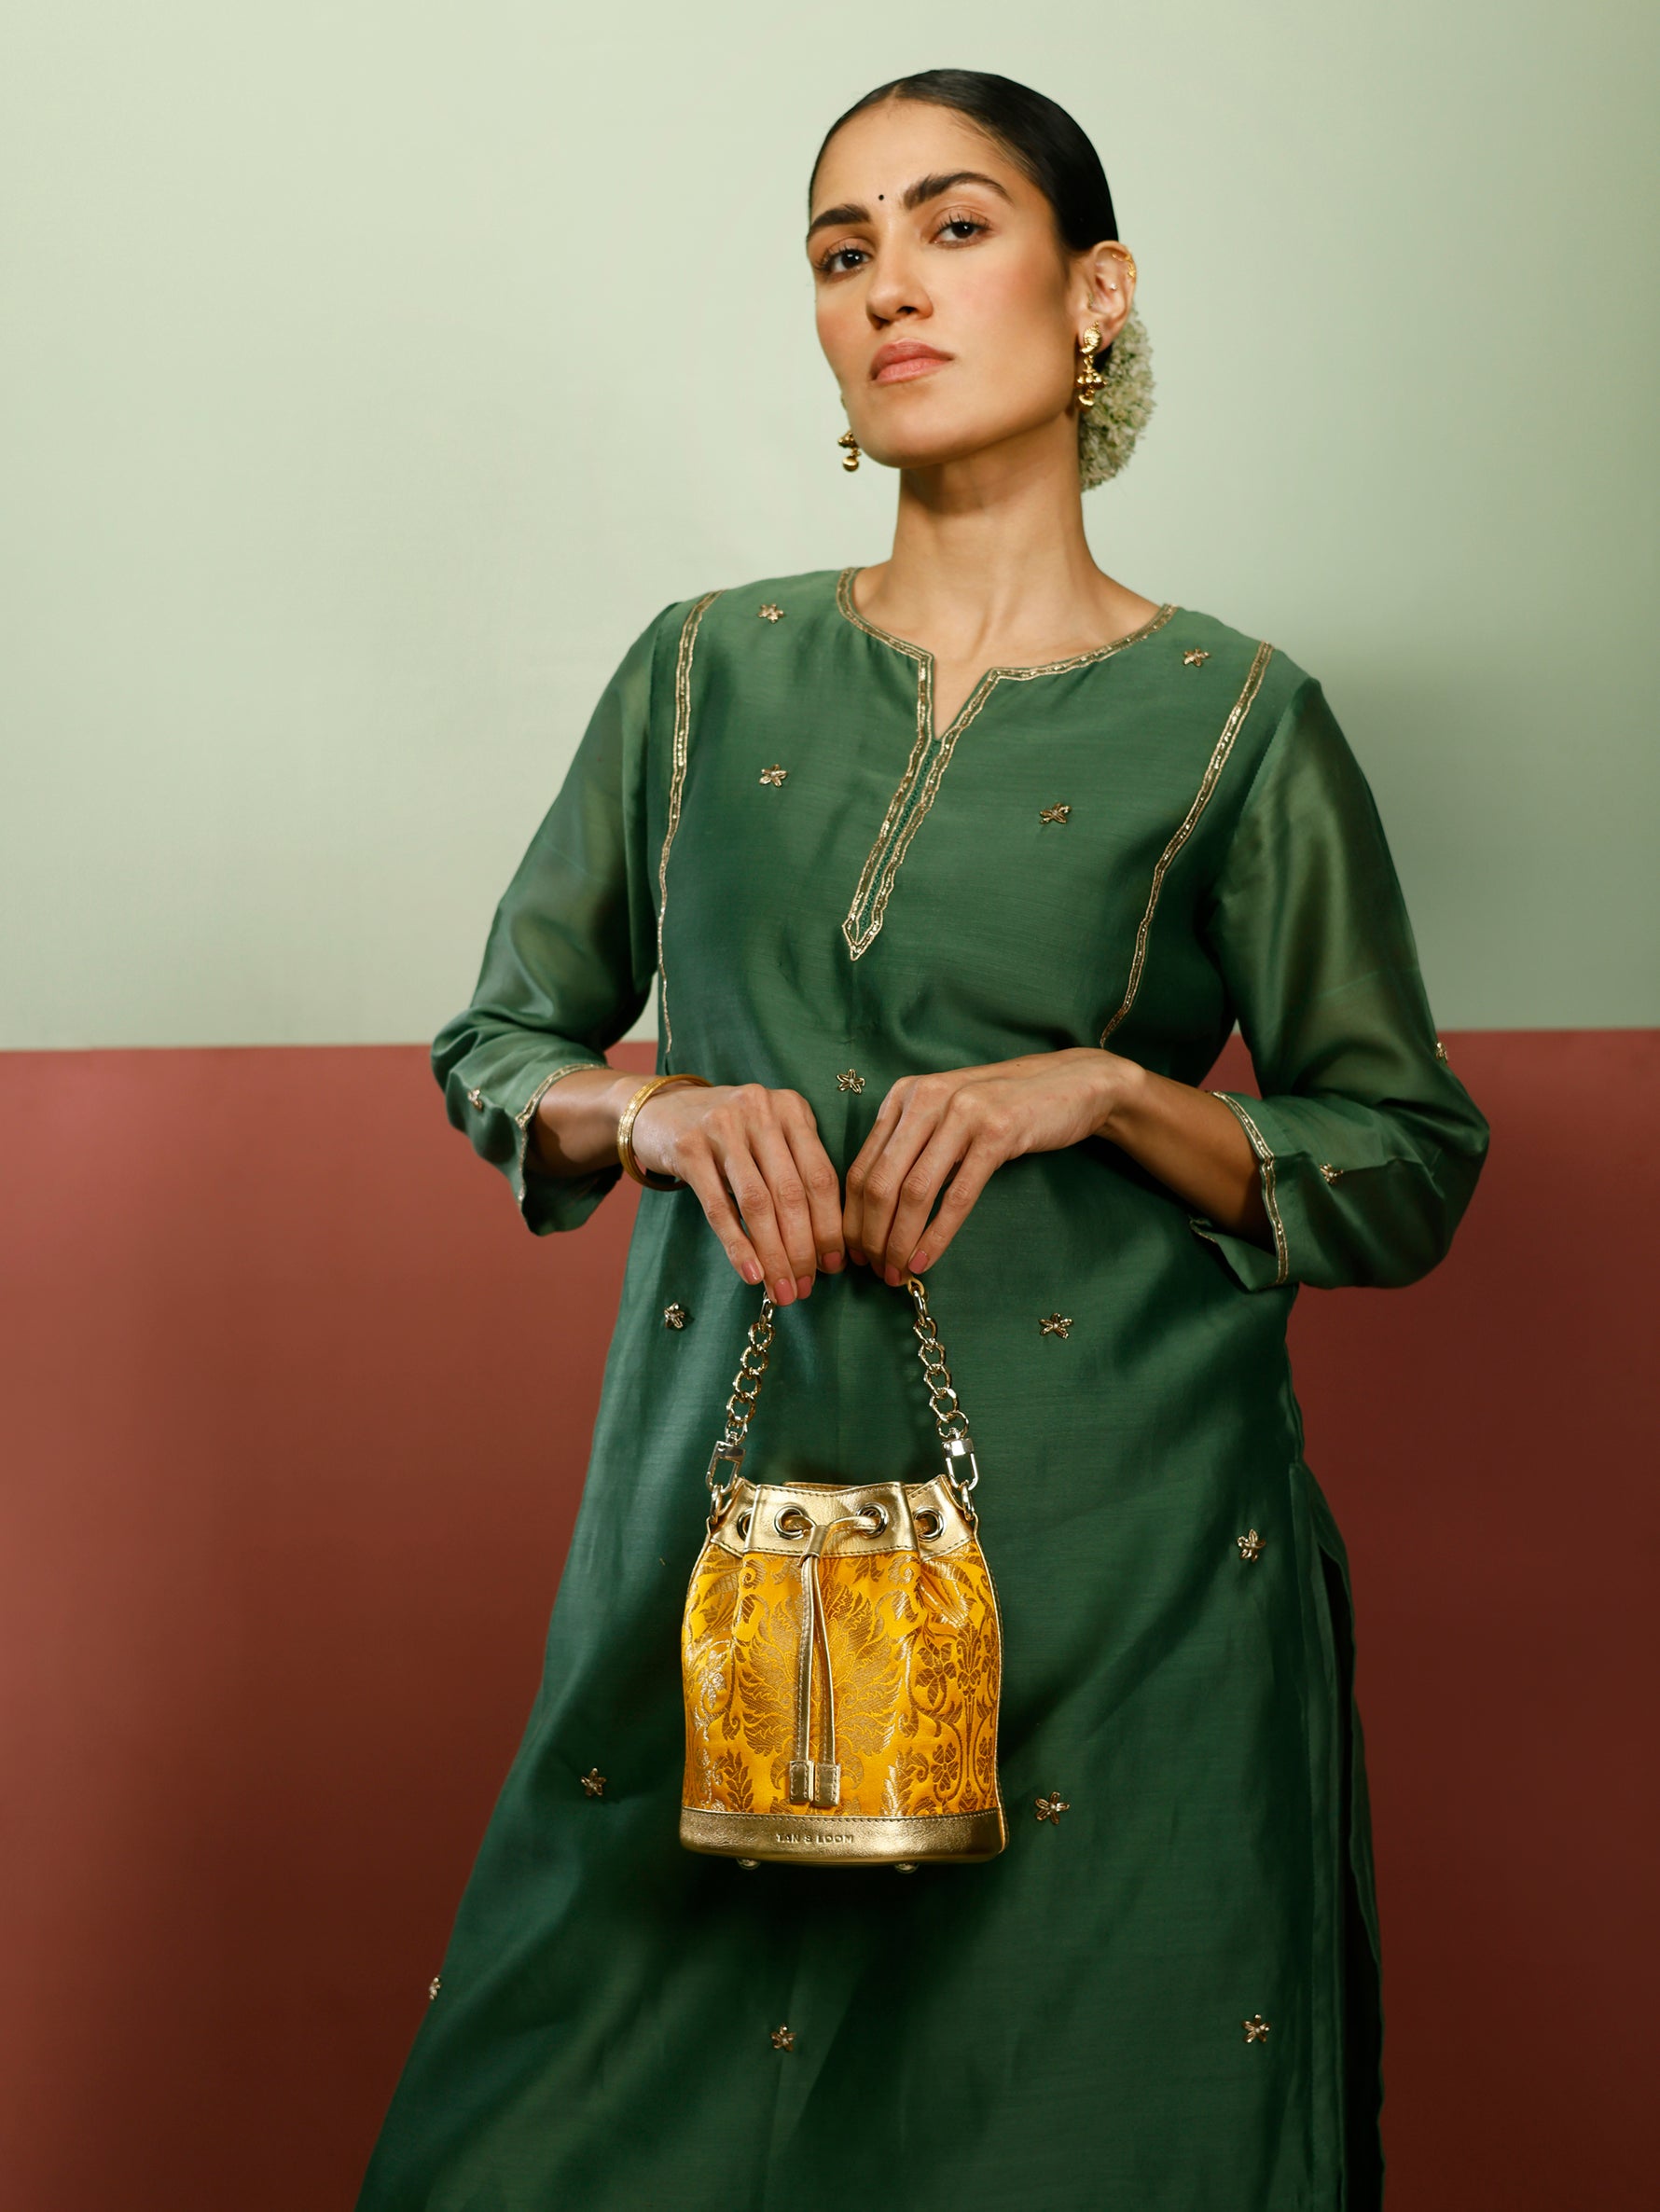 Handcrafted Yellow Genuine Leather & Banarasi Brocade Bucket Potli Bag for Women Tan & Loom